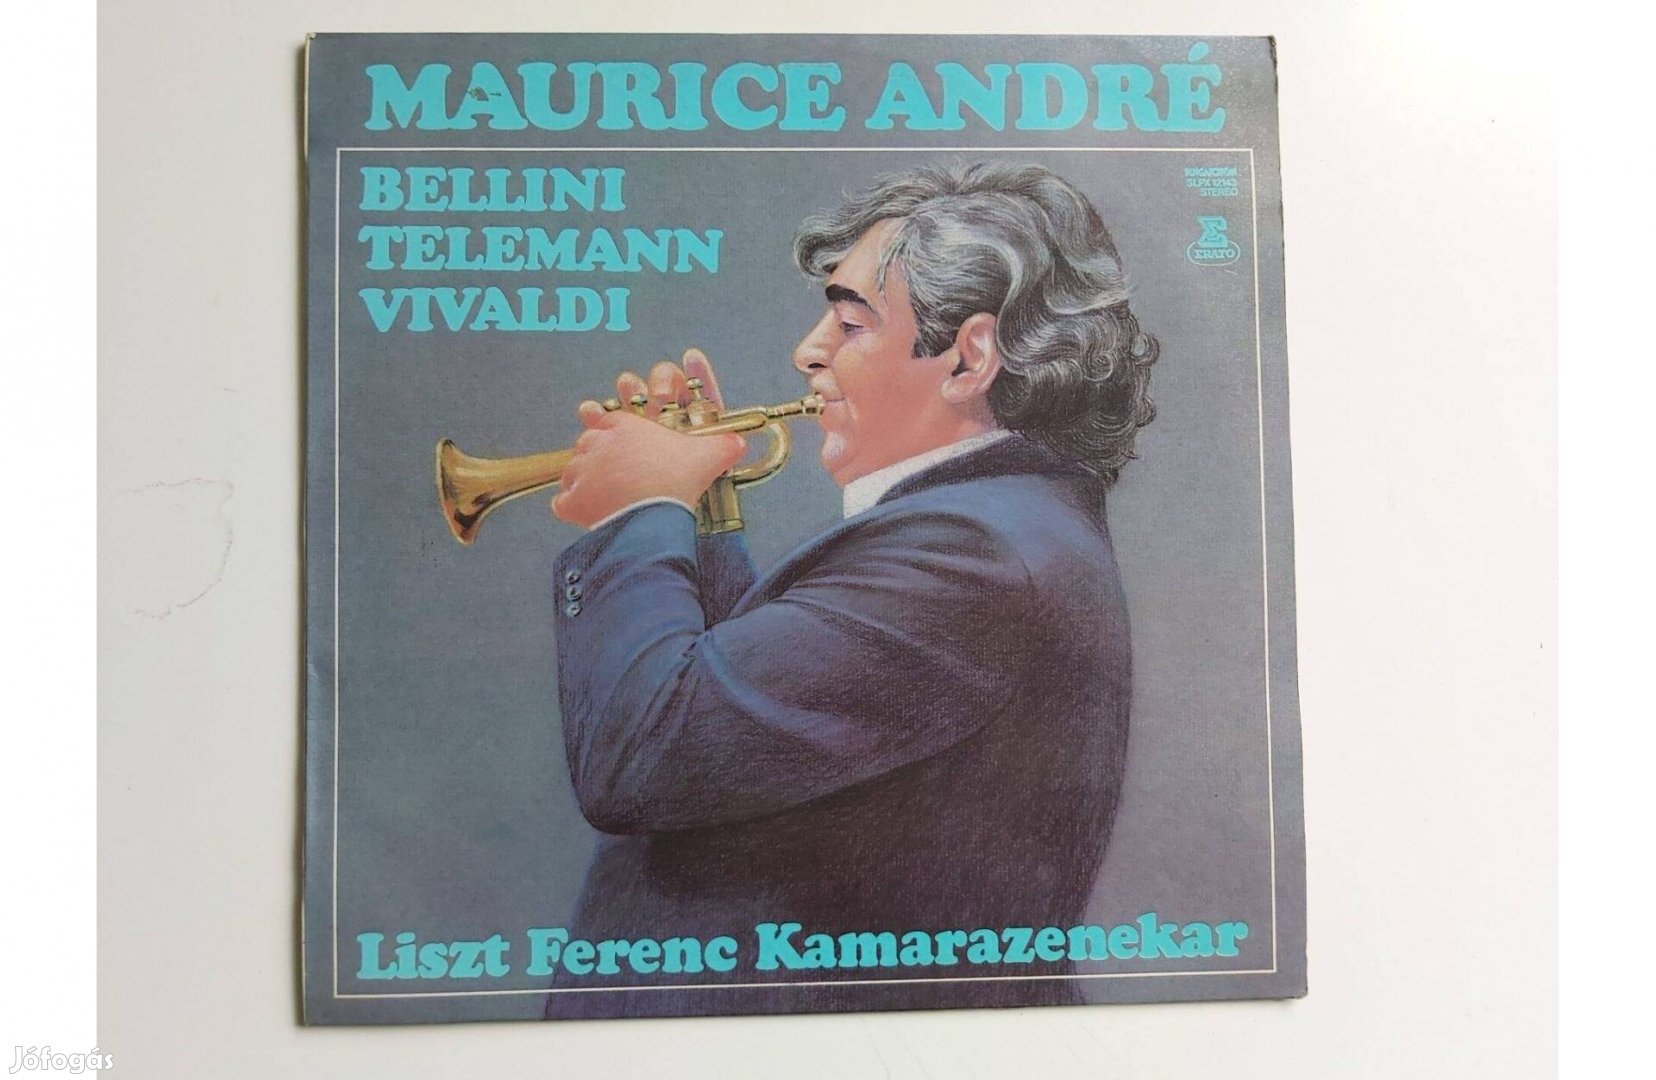 Maurice André - Bellini, Telemann, Vivaldi (LP)